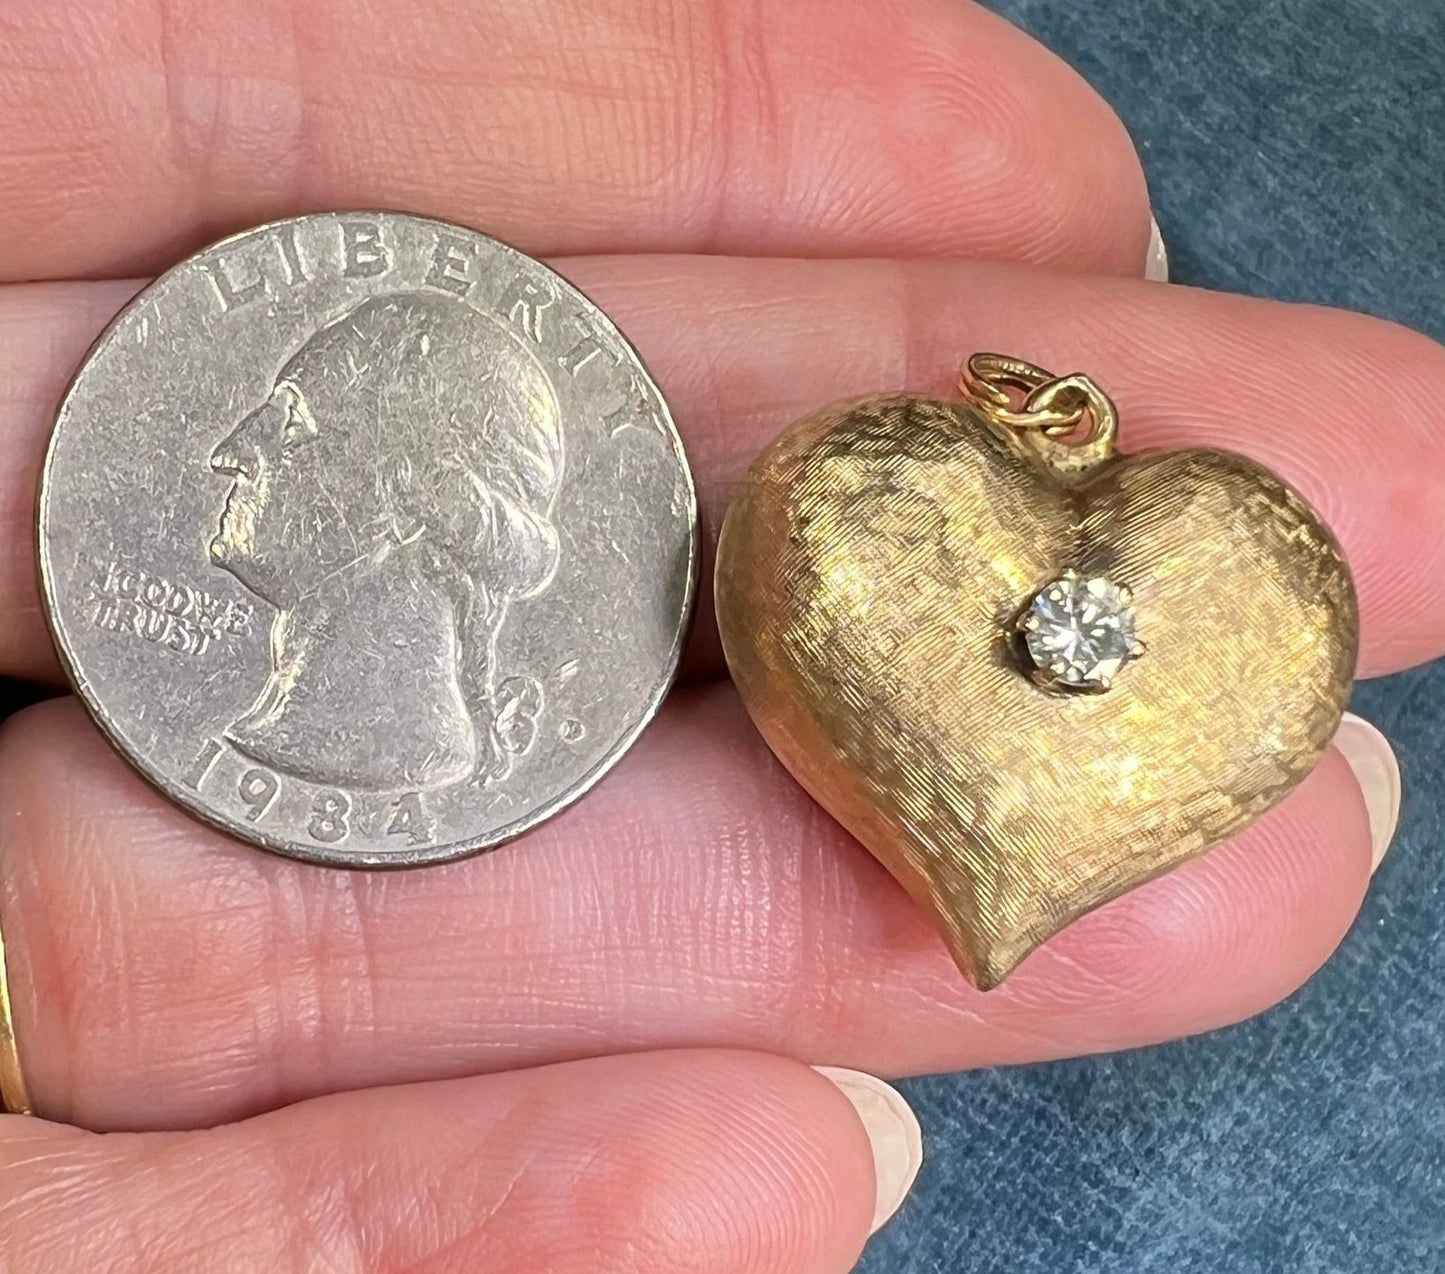 14k Gold Puffy HEART Pendant w Rose-Cut Diamond. Large 1" *Video*